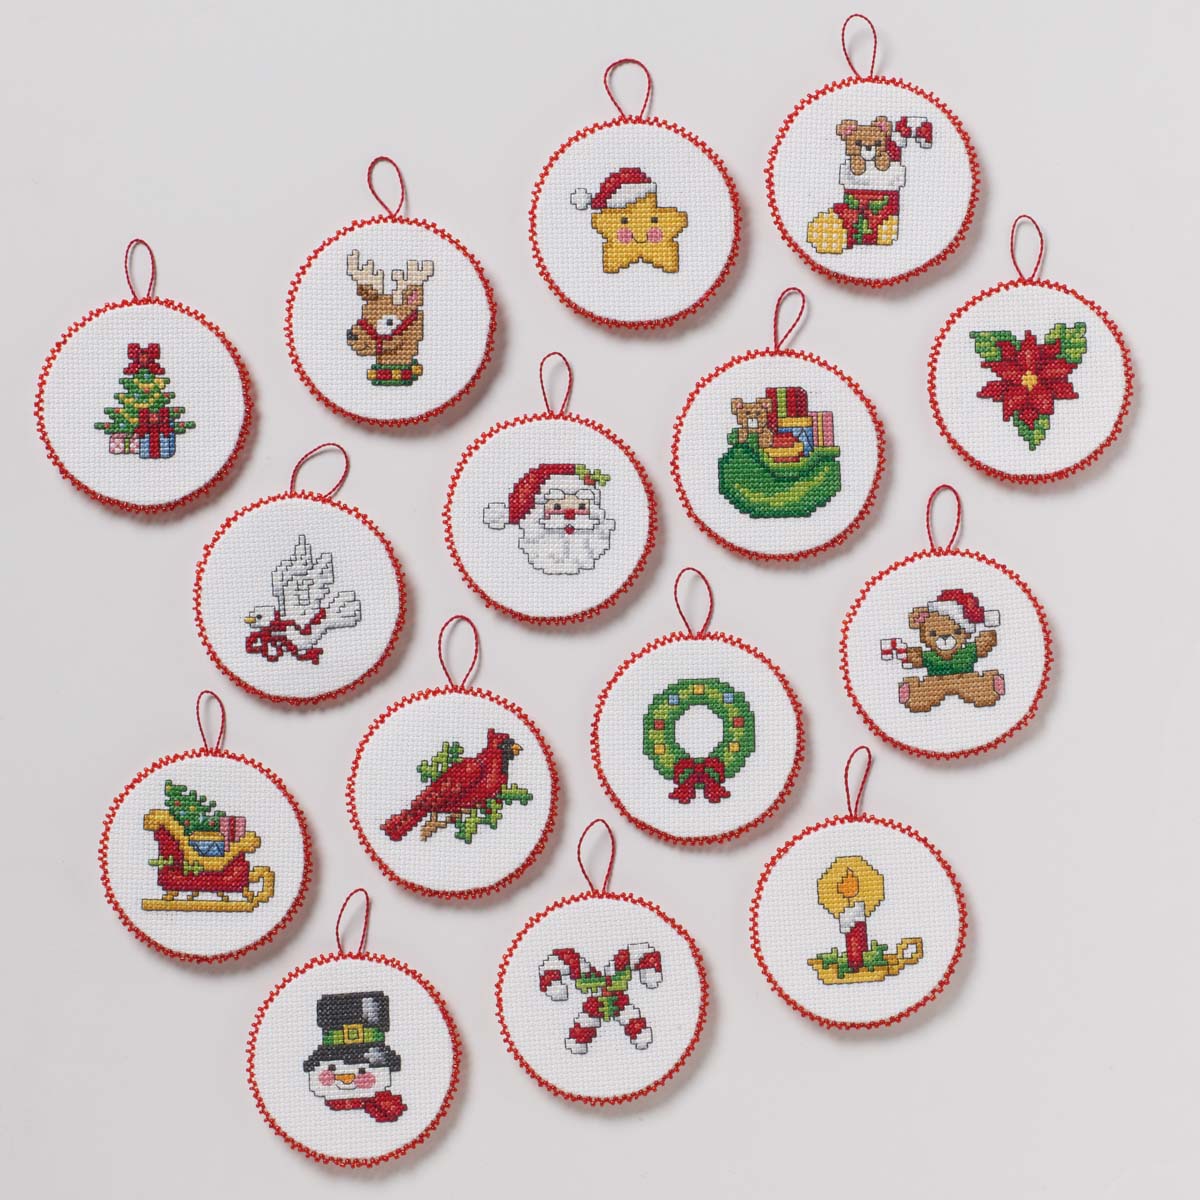 Bucilla ® Seasonal - Counted Cross Stitch - Ornament Kits - Classic Christmas Collection - 89454E